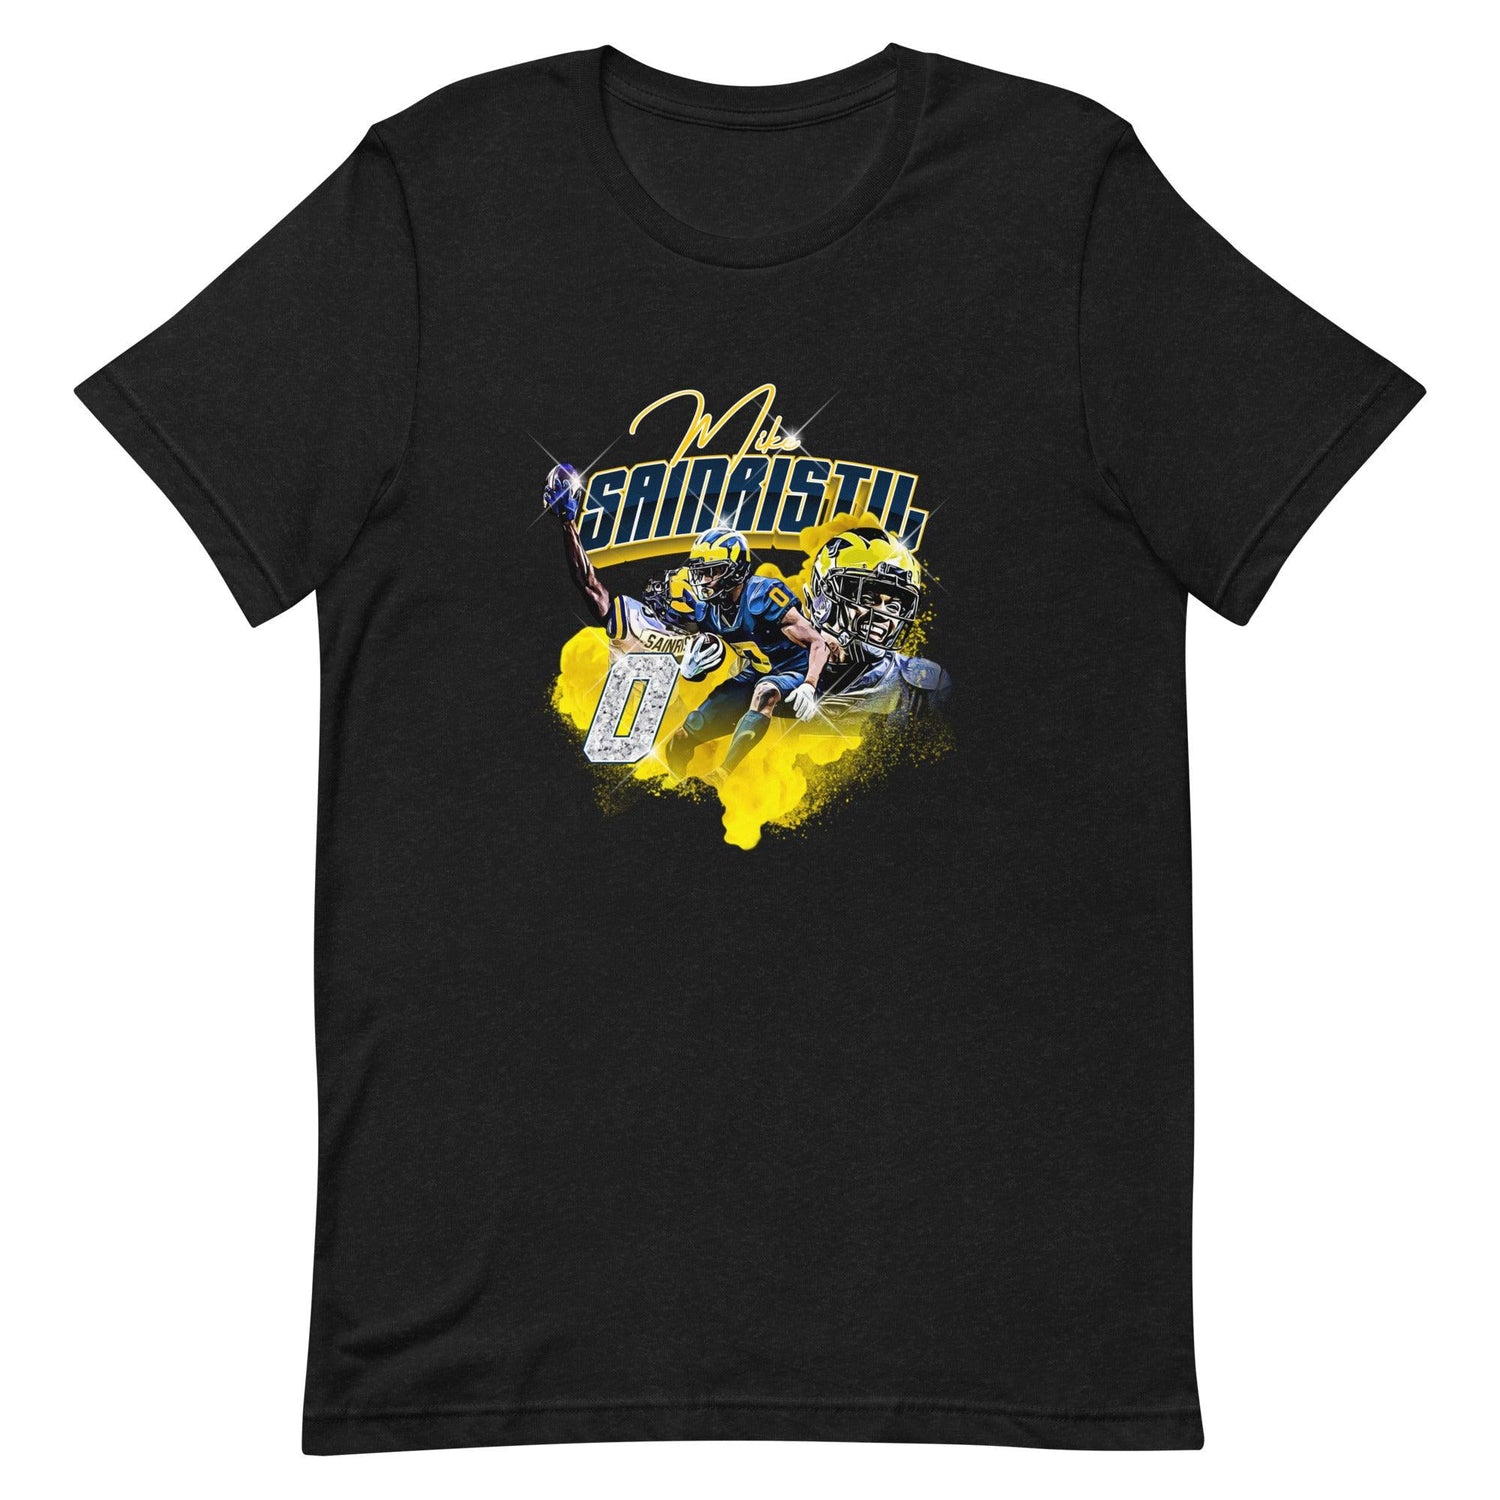 Mike Sainristil "Limited Edition" t-shirt - Fan Arch